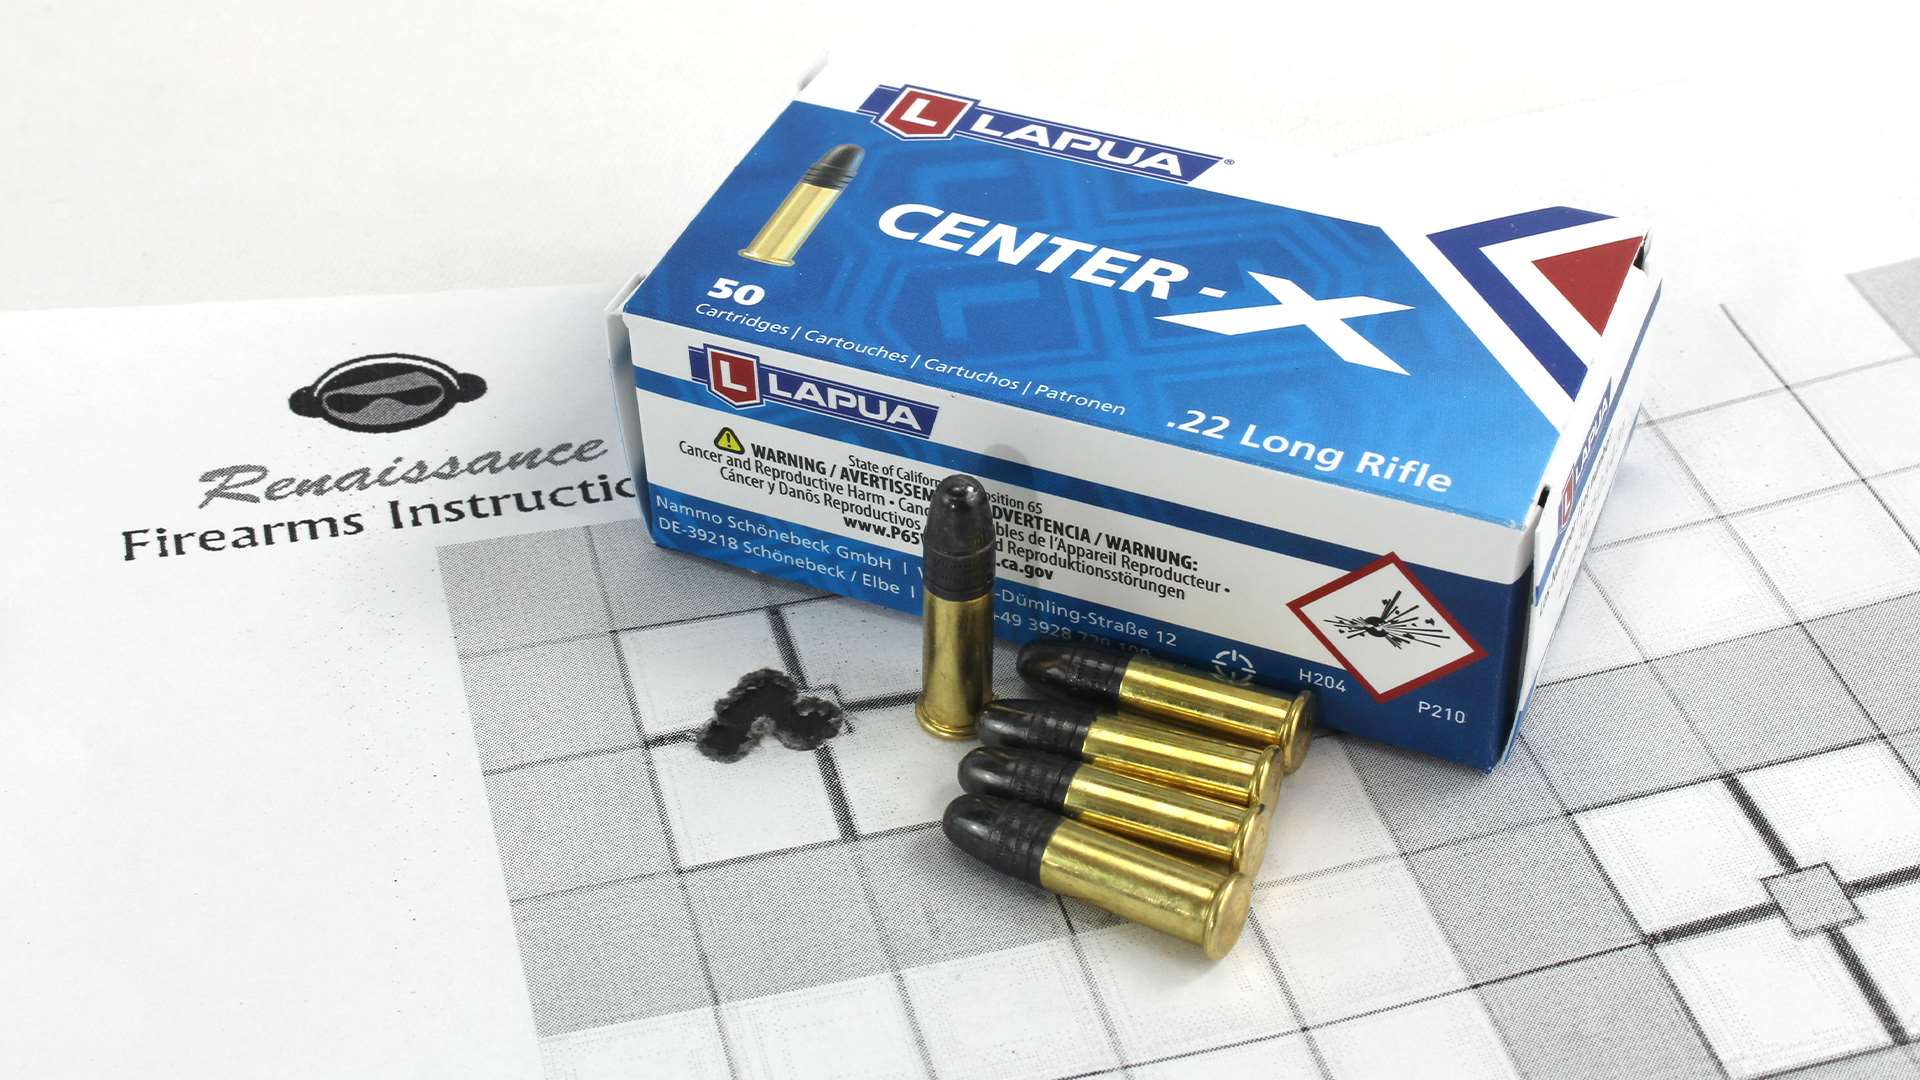 Lapua Center-X cartridges and target